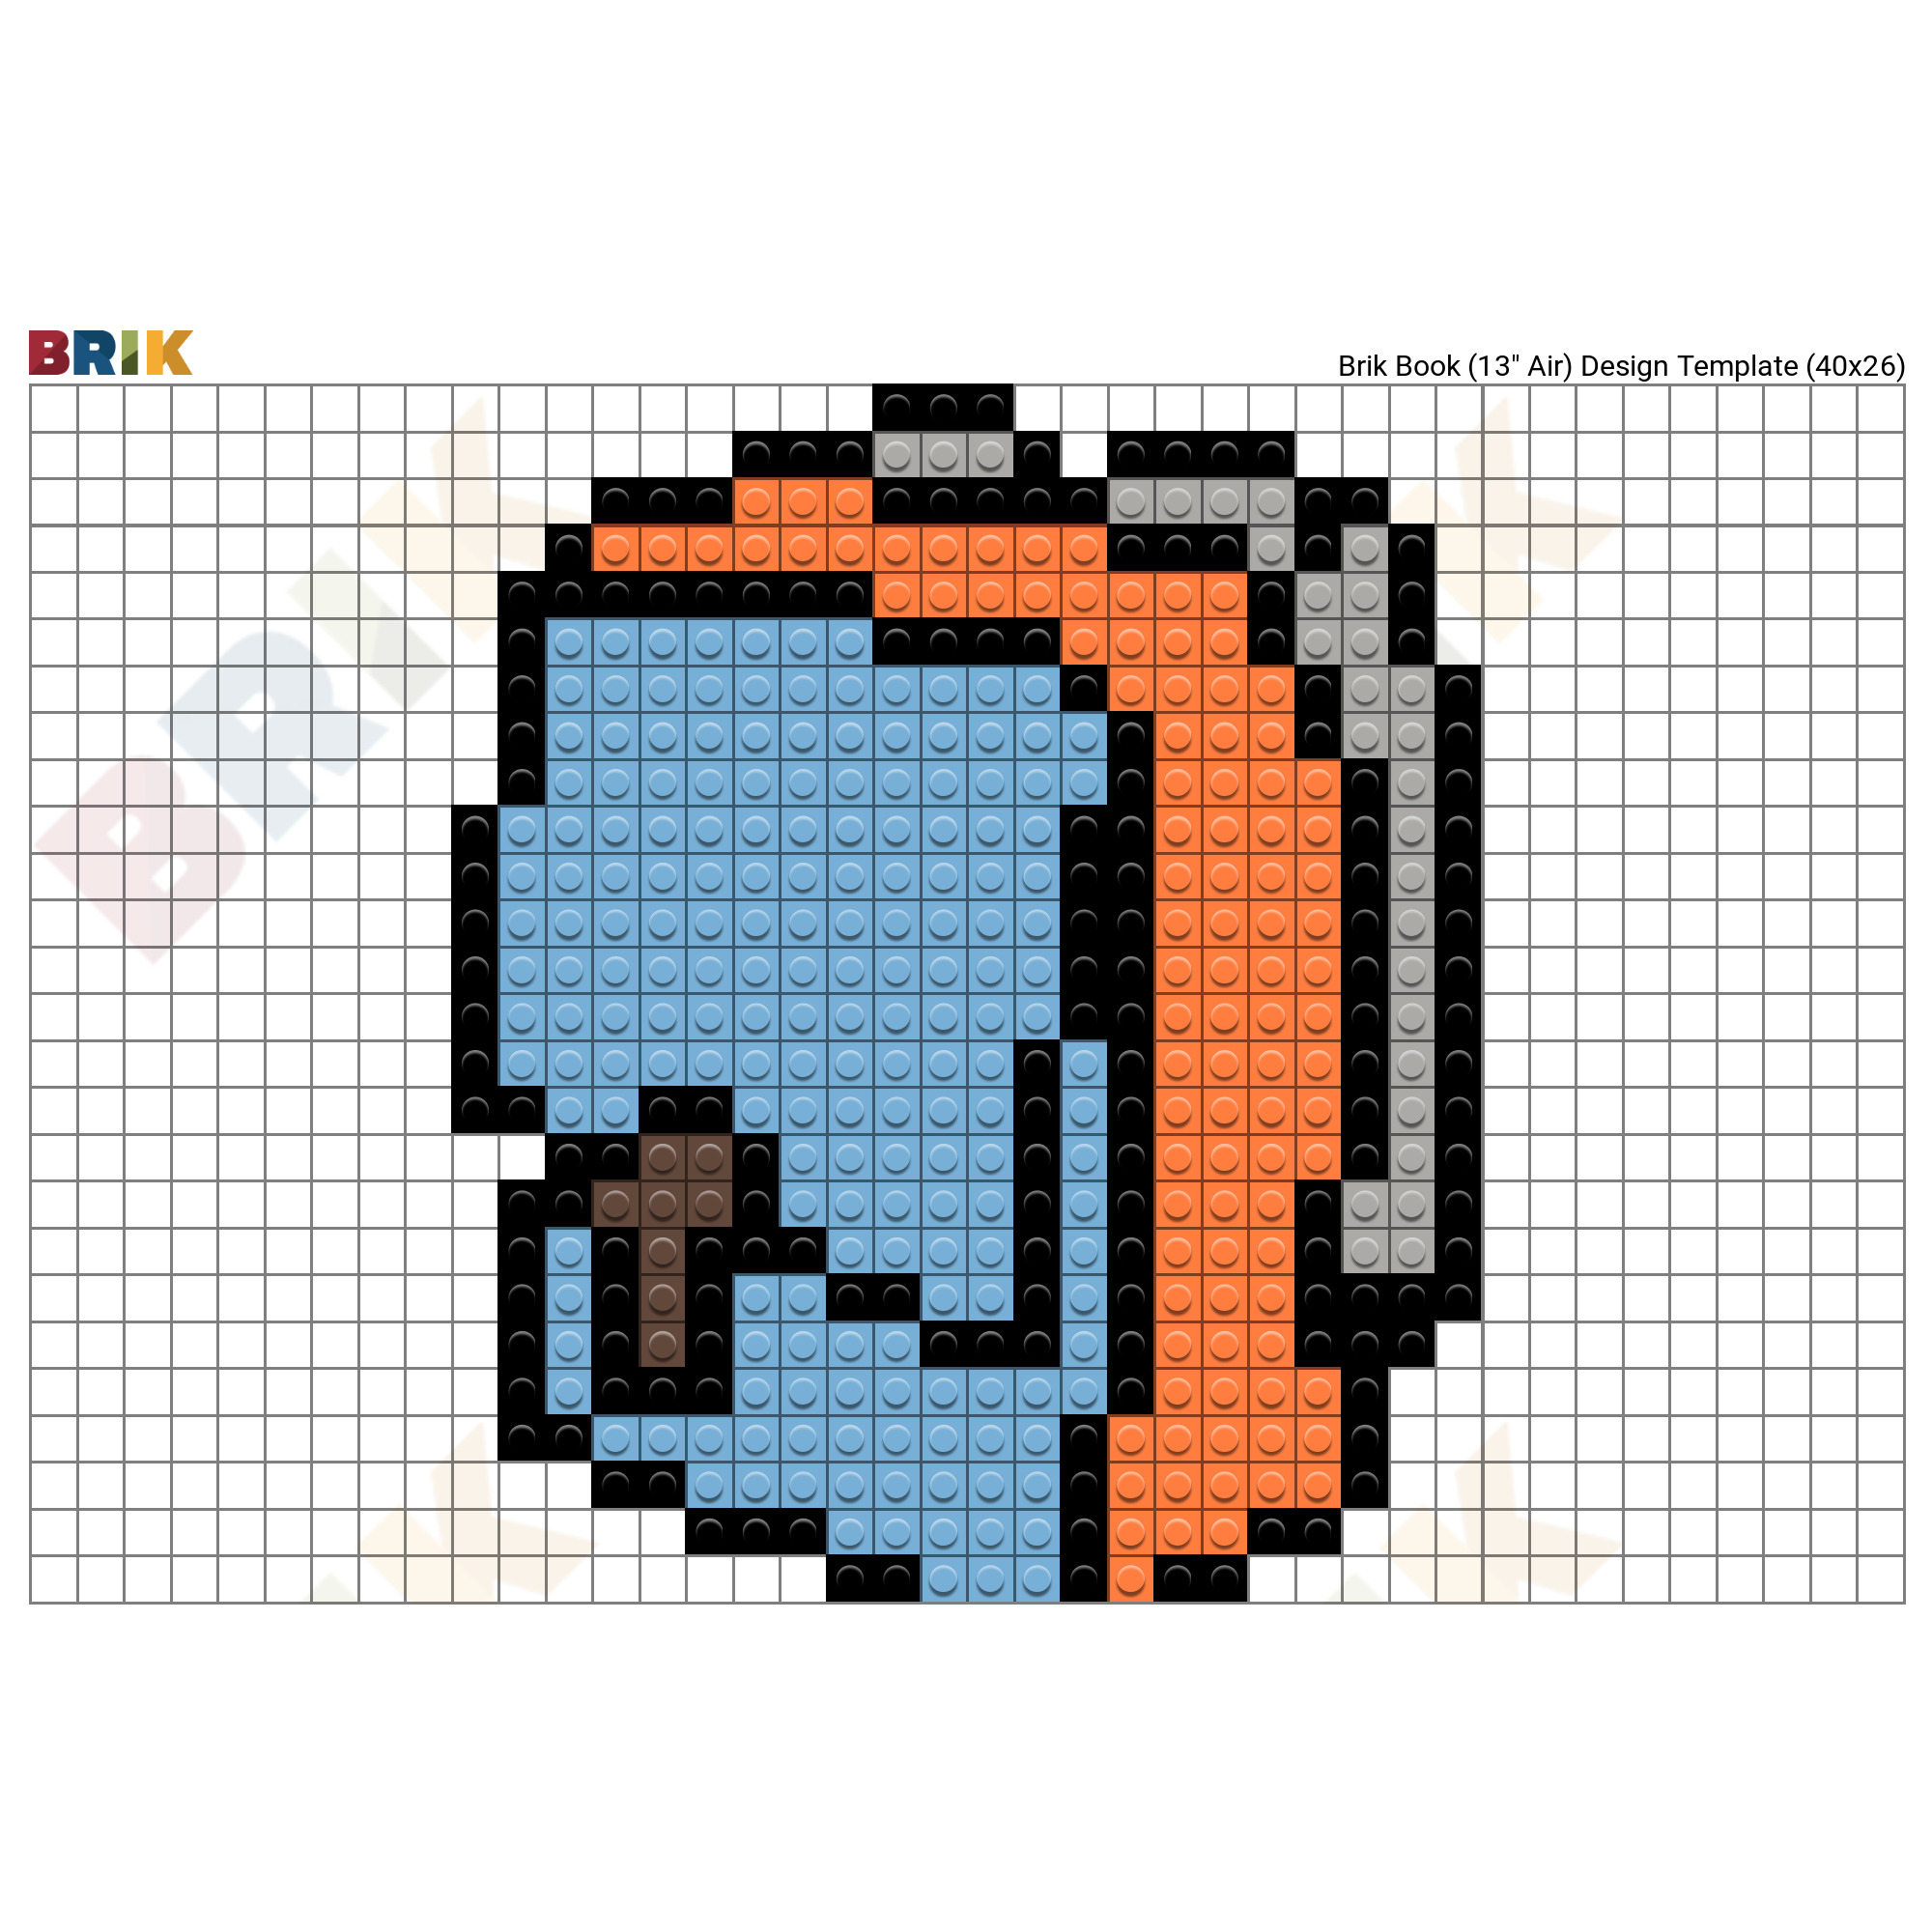 PixelDailies - Day 367 in a row: Backpack : r/PixelArt